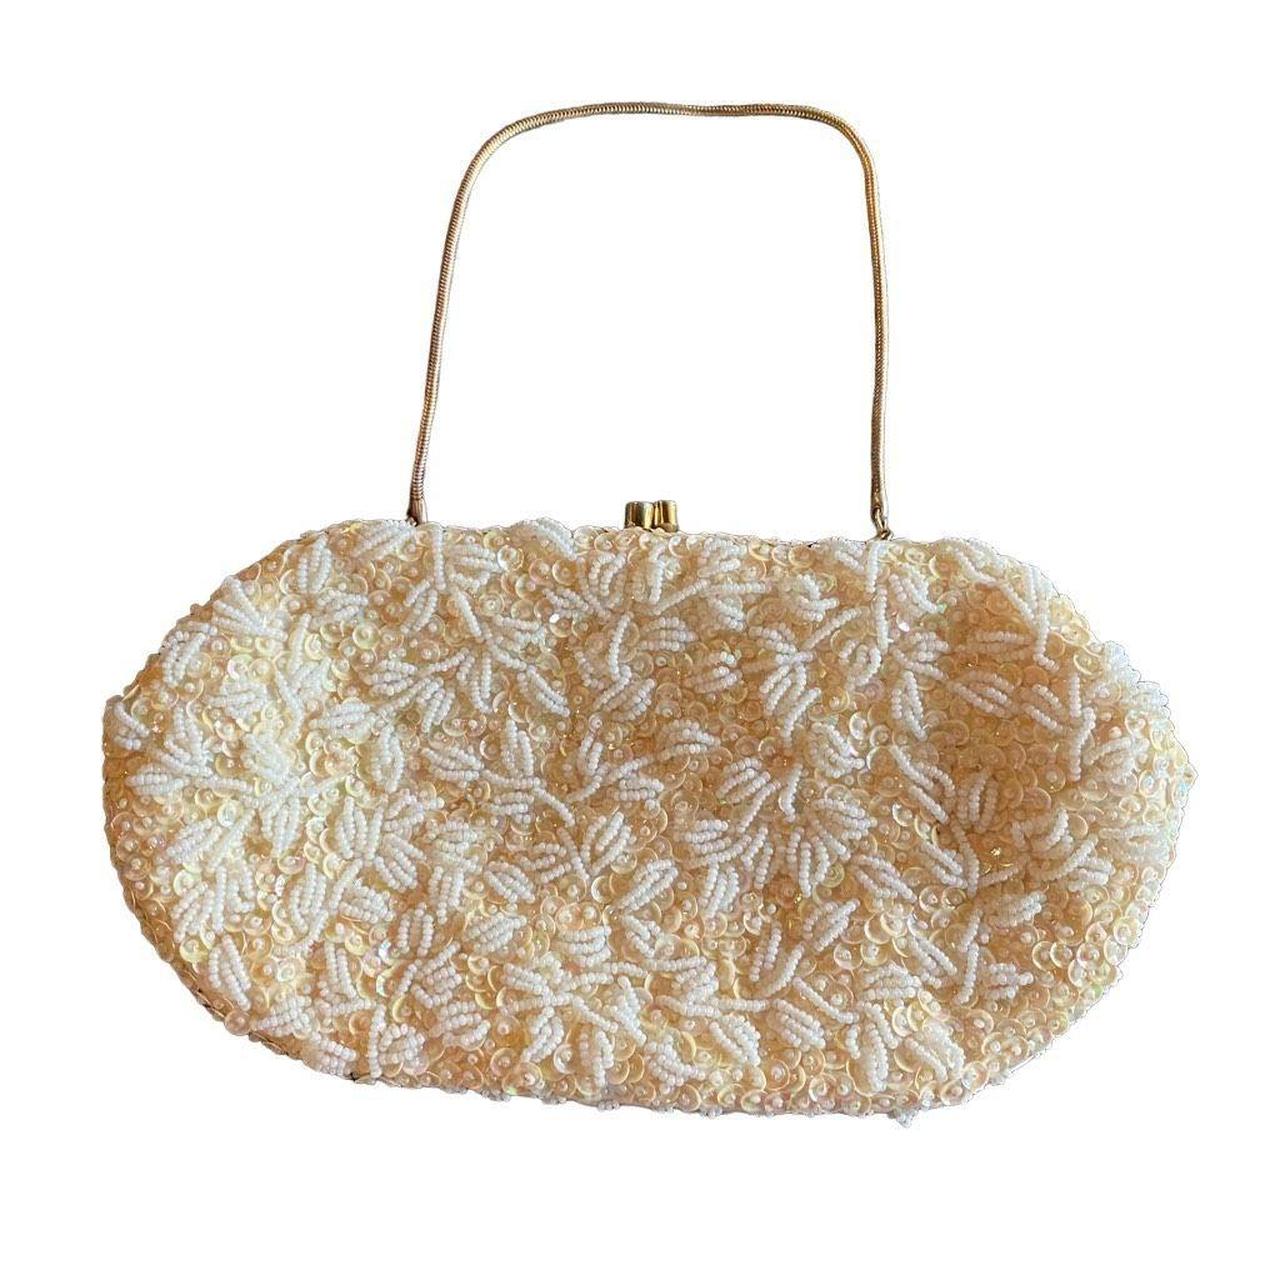 Vintage beaded evening bag handbag purse small ivory - Depop